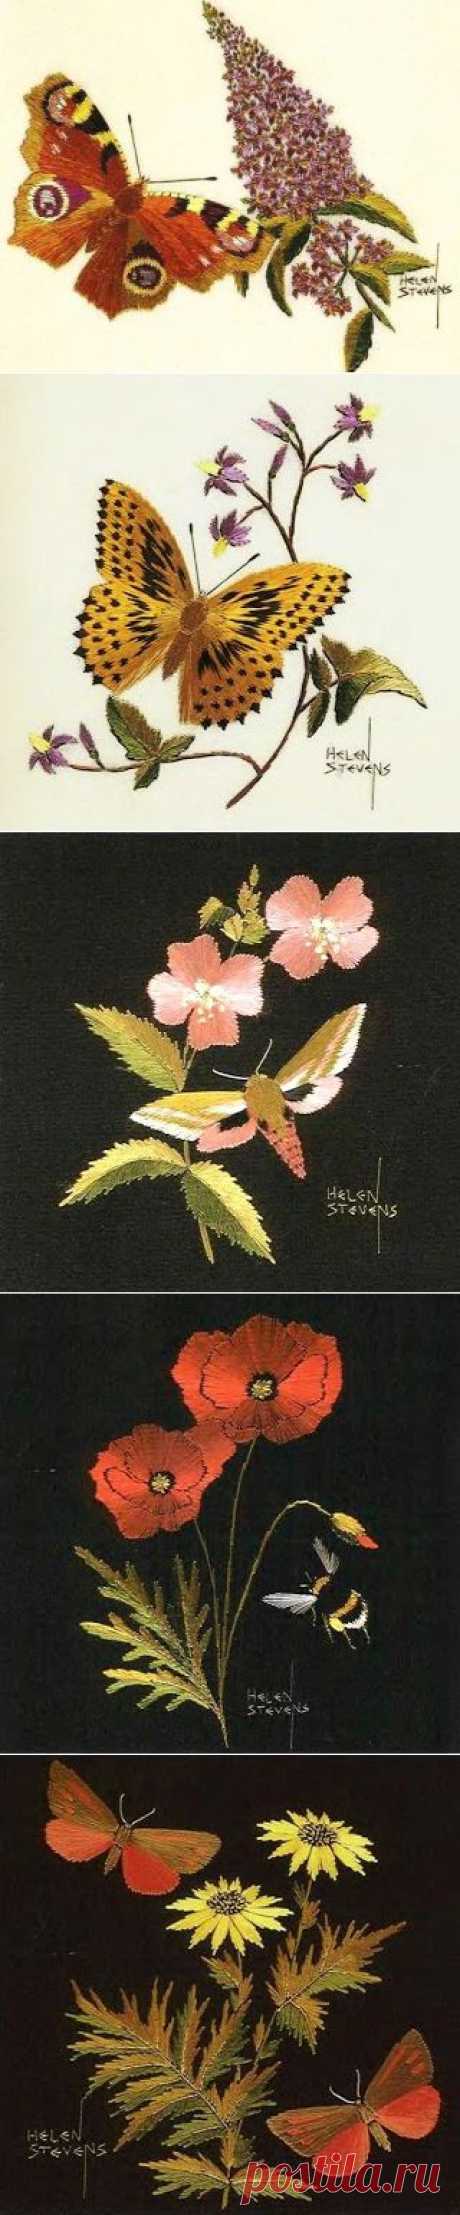 Великолепная гладь от Helen M. Stevens (ч.2): цветы, бабочки и шмели